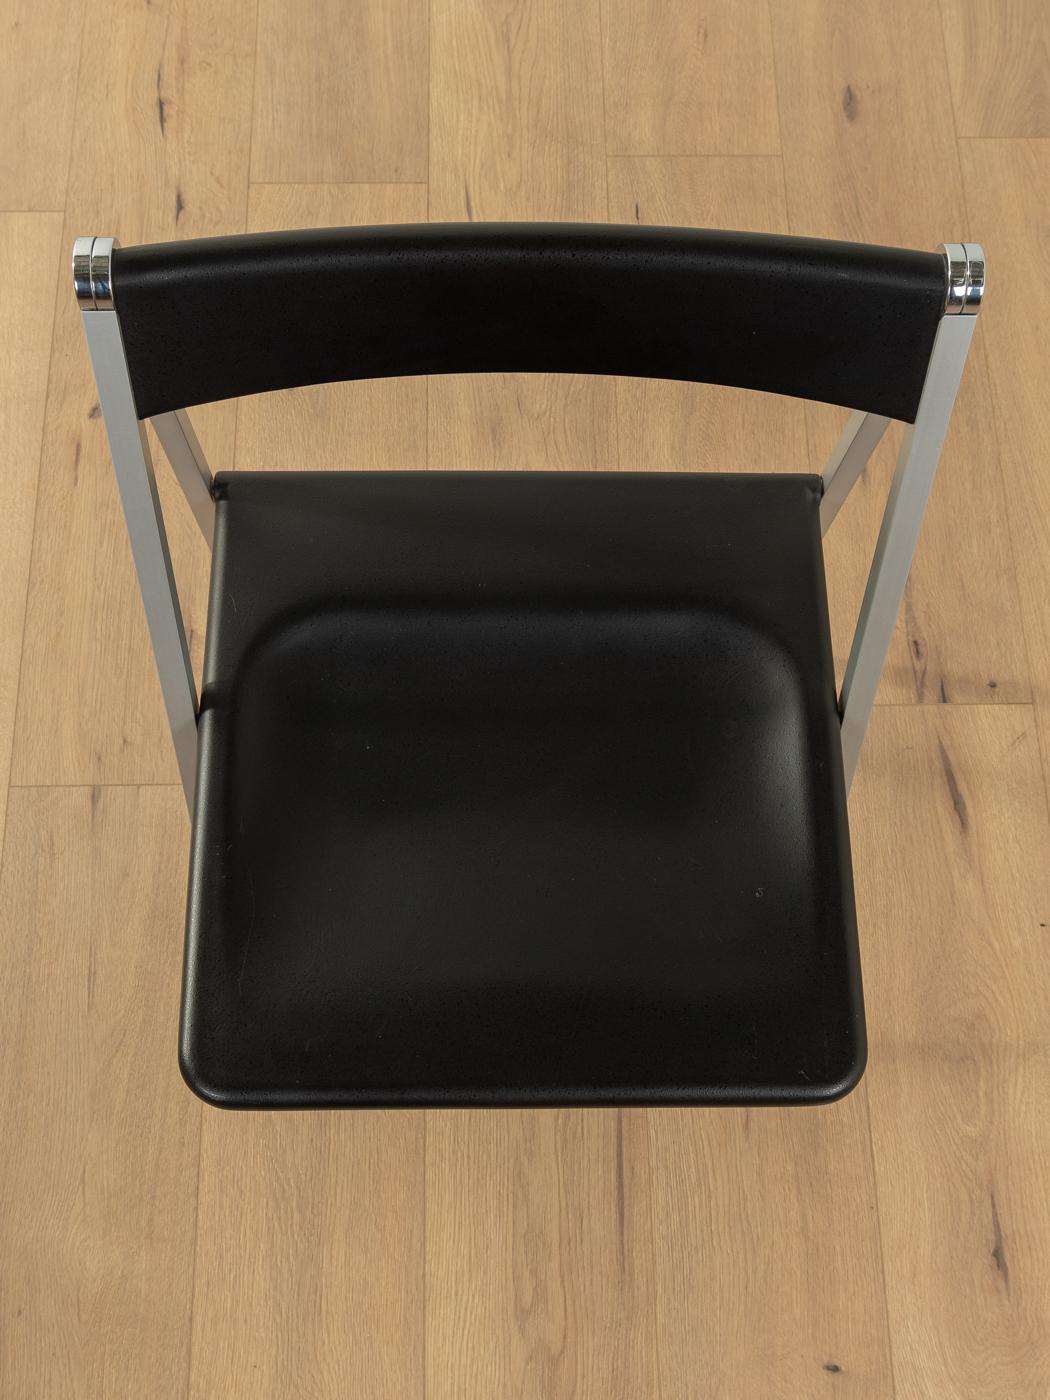 2x Team Form AG for interlübke folding chairs, Swiss Design 2